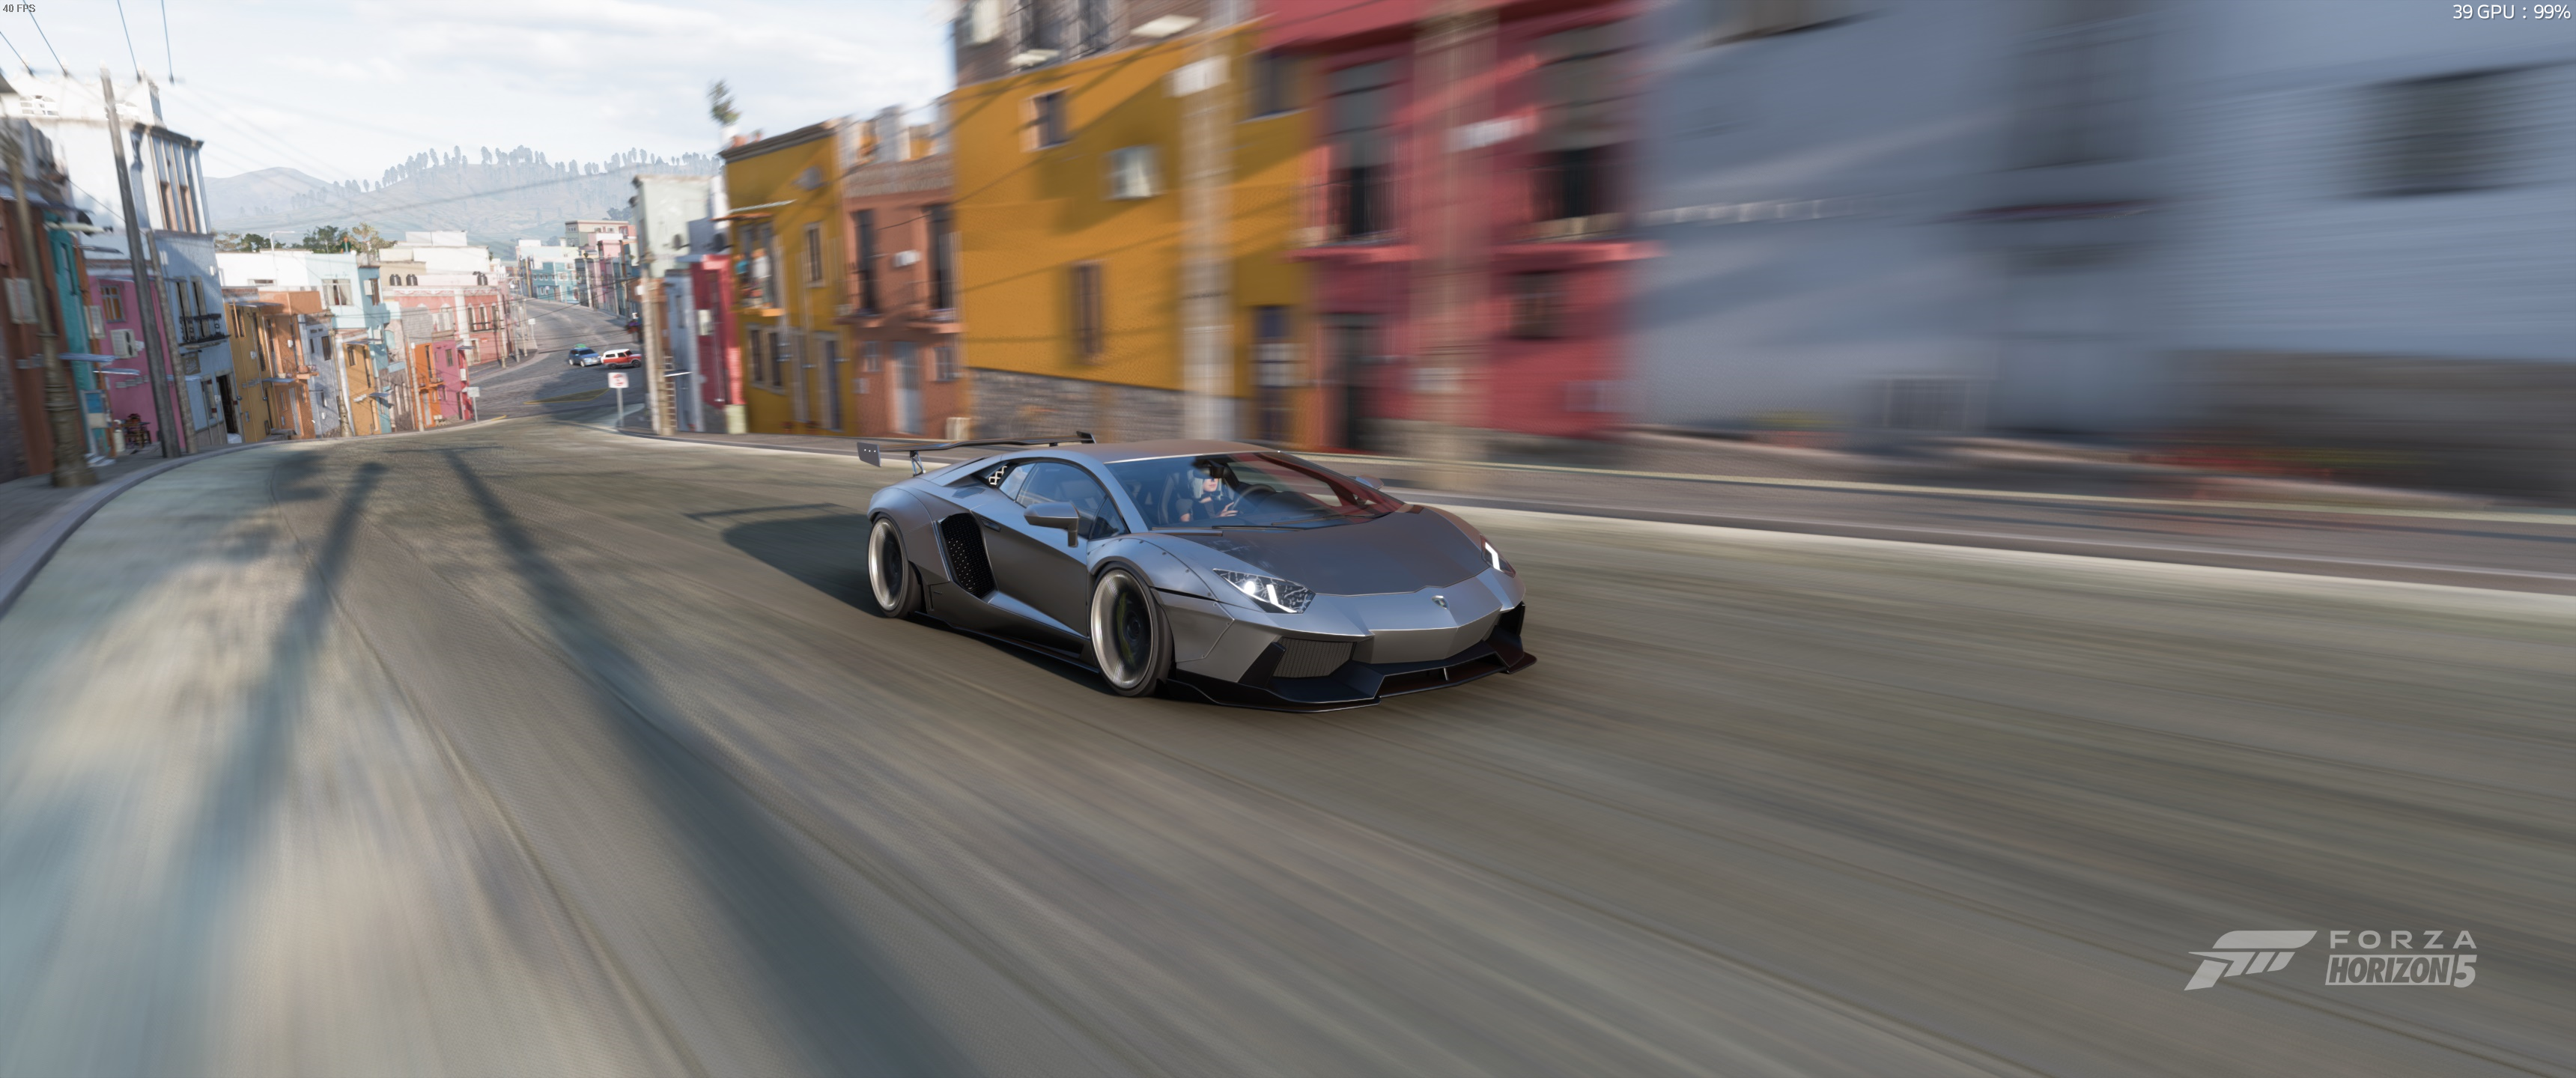 Car LP 700 Video Games Forza Horizon 5 Lamborghini 3440x1440